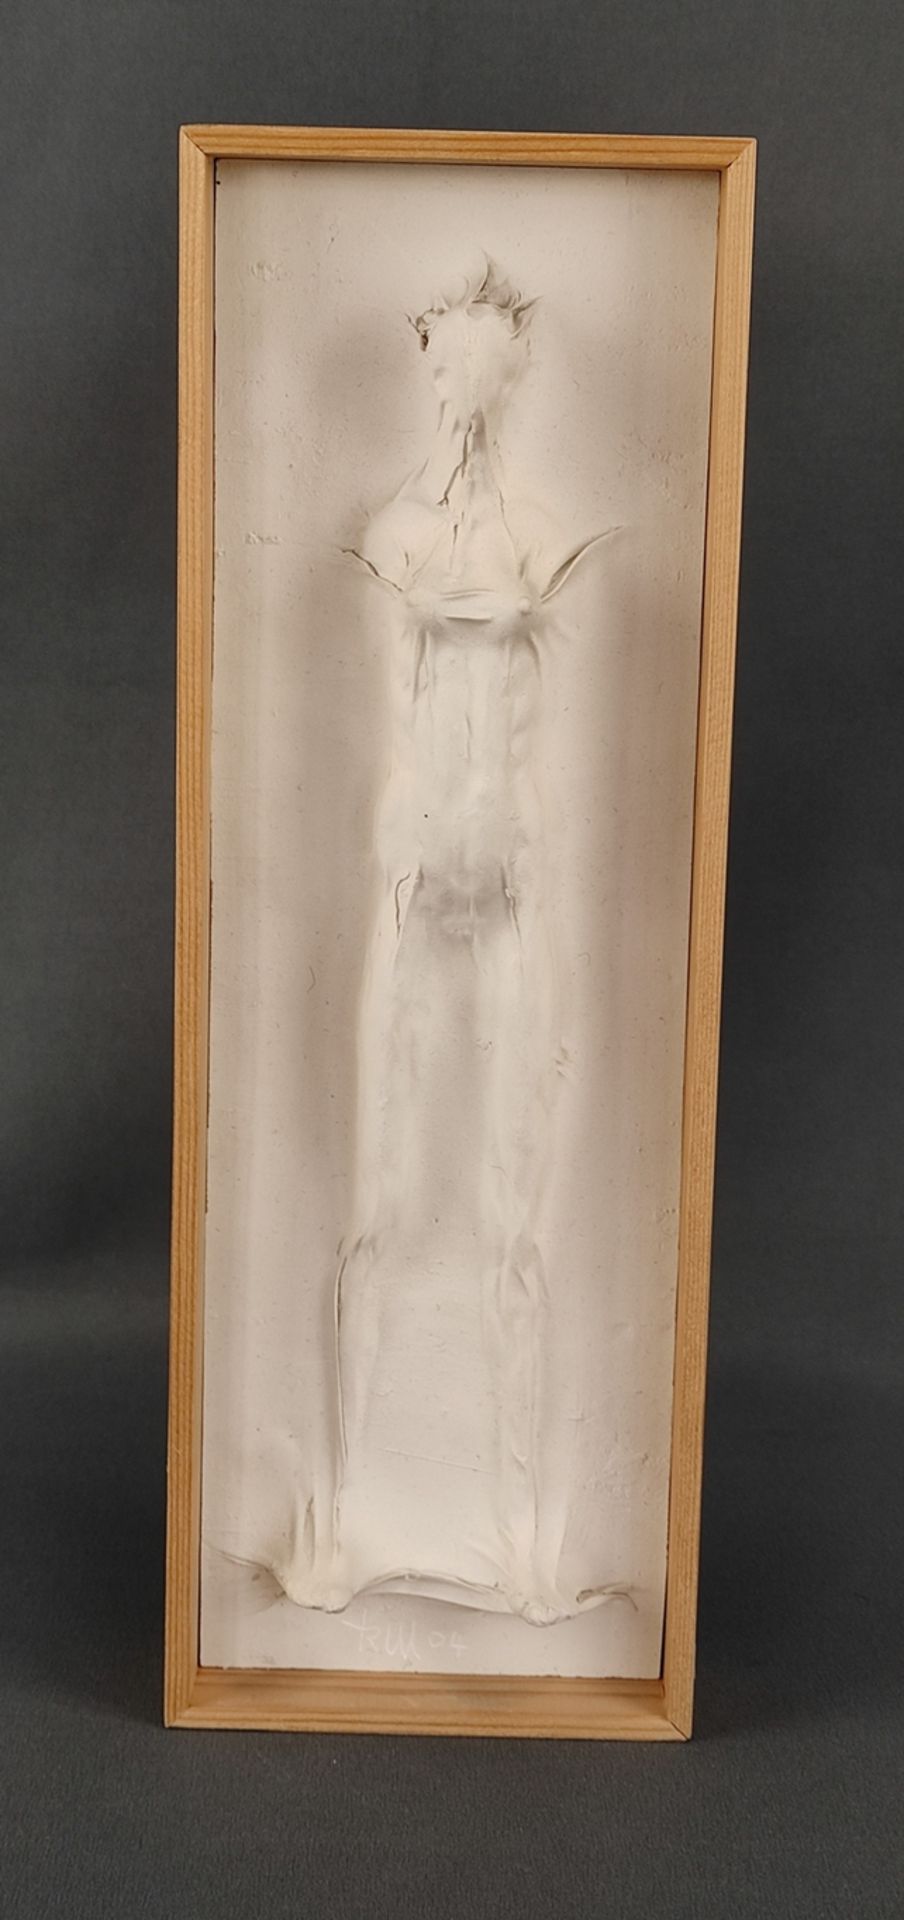 Martin, Roland (1927 Tuttlingen) "Female Figure", under cloth, plaster cast in wooden frame, monogr